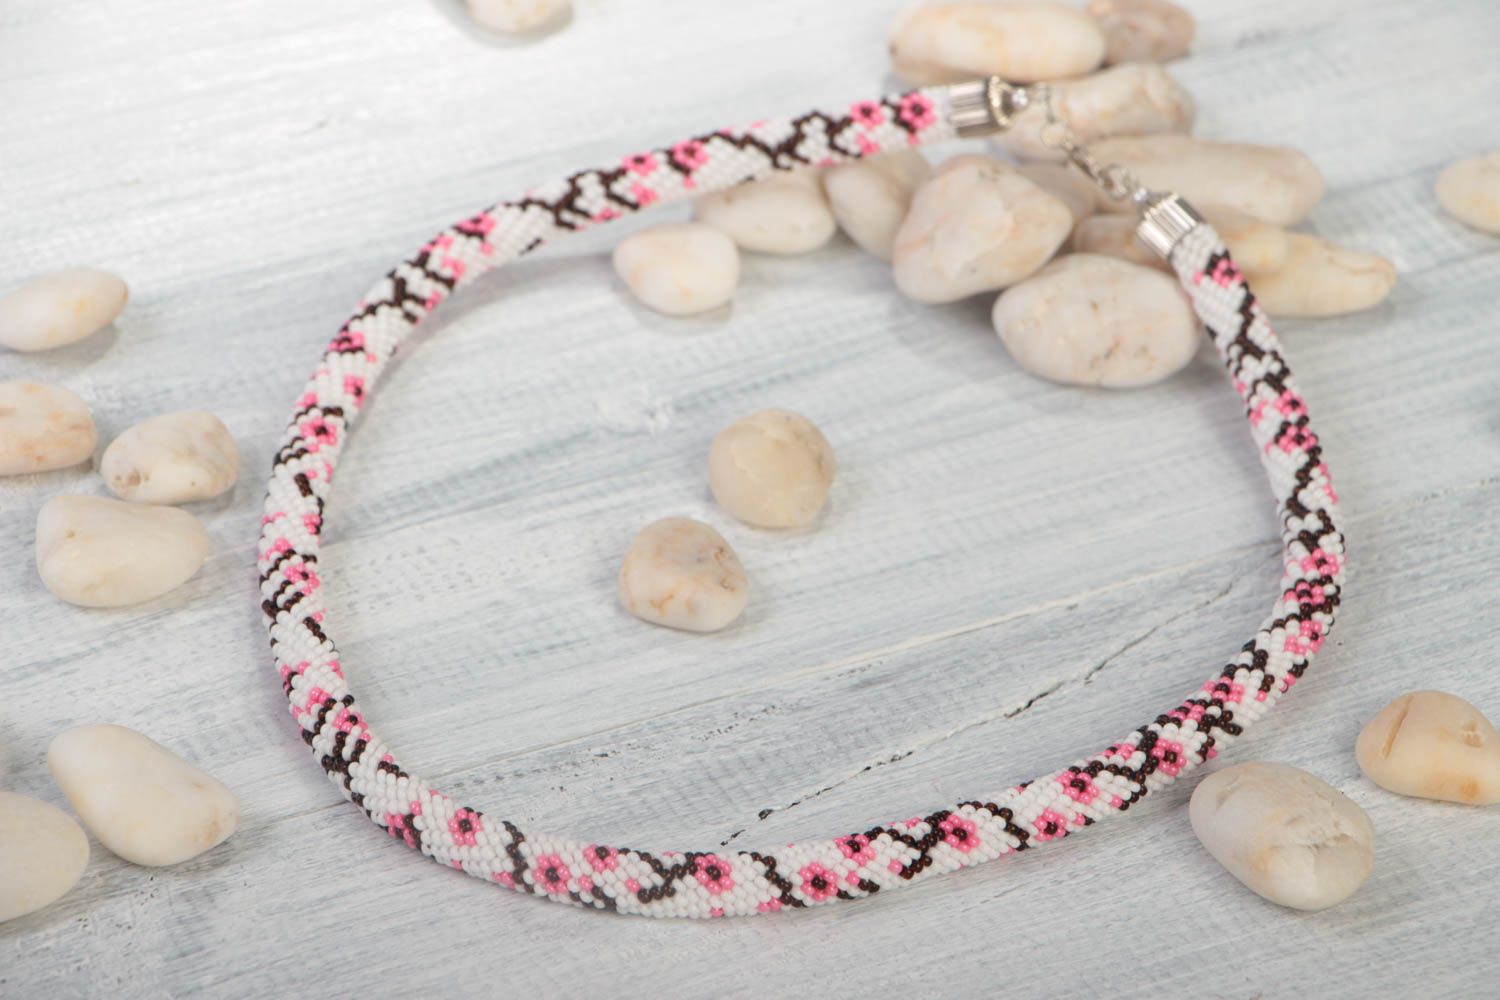 Unusual handmade beaded cord necklace designer fashion jewelry gift ideas photo 1